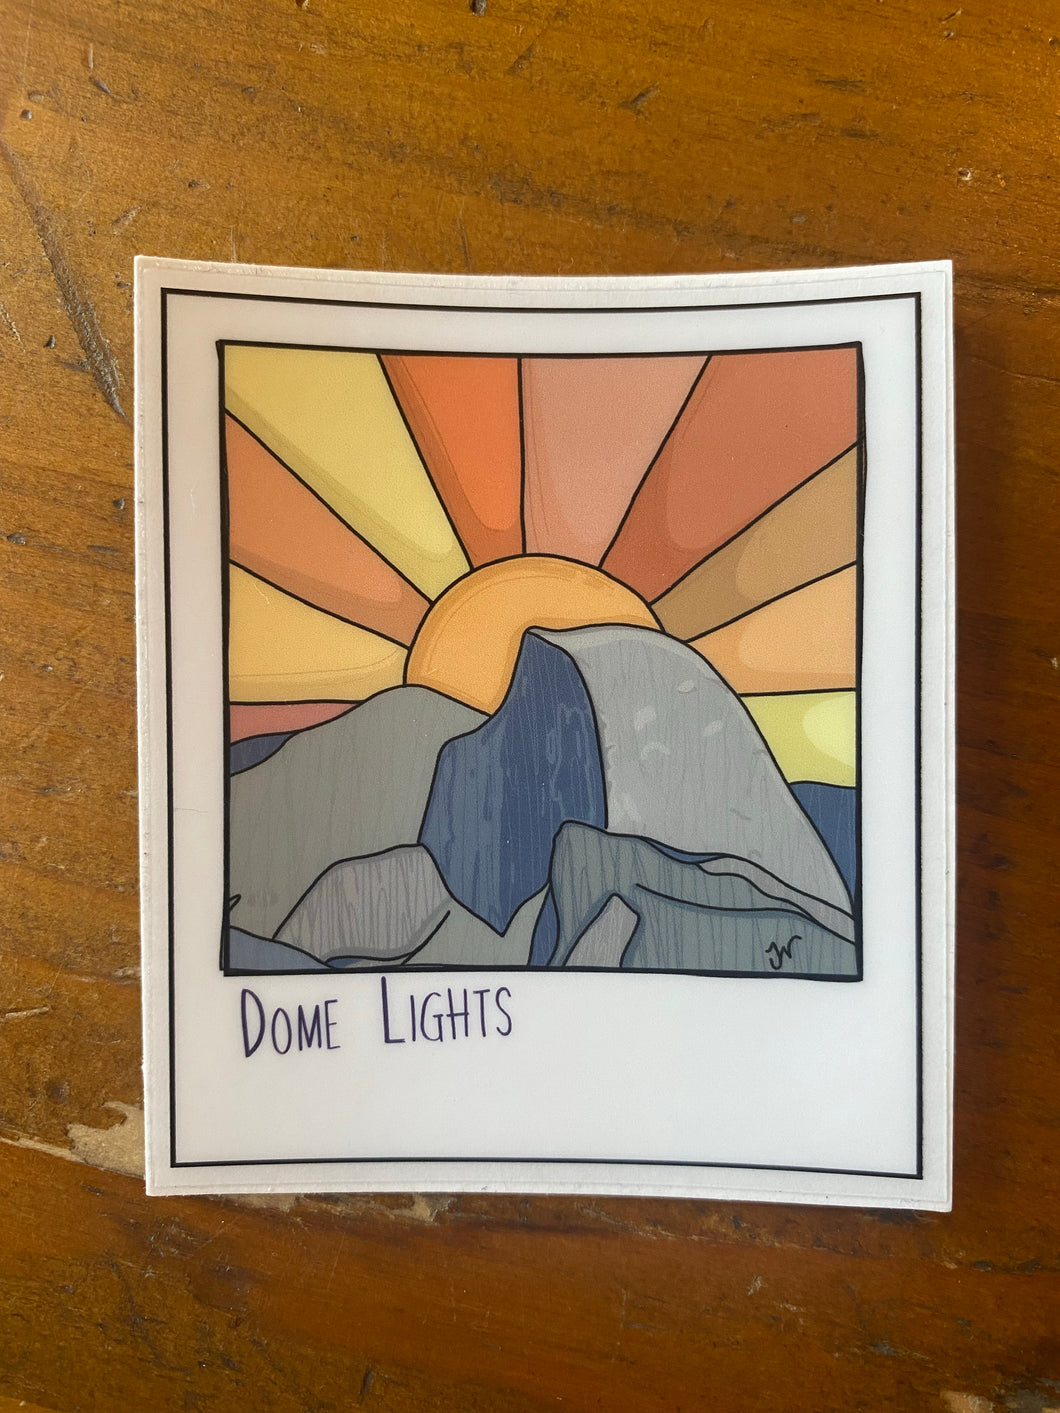 The Dome Lights PATHOS Sticker